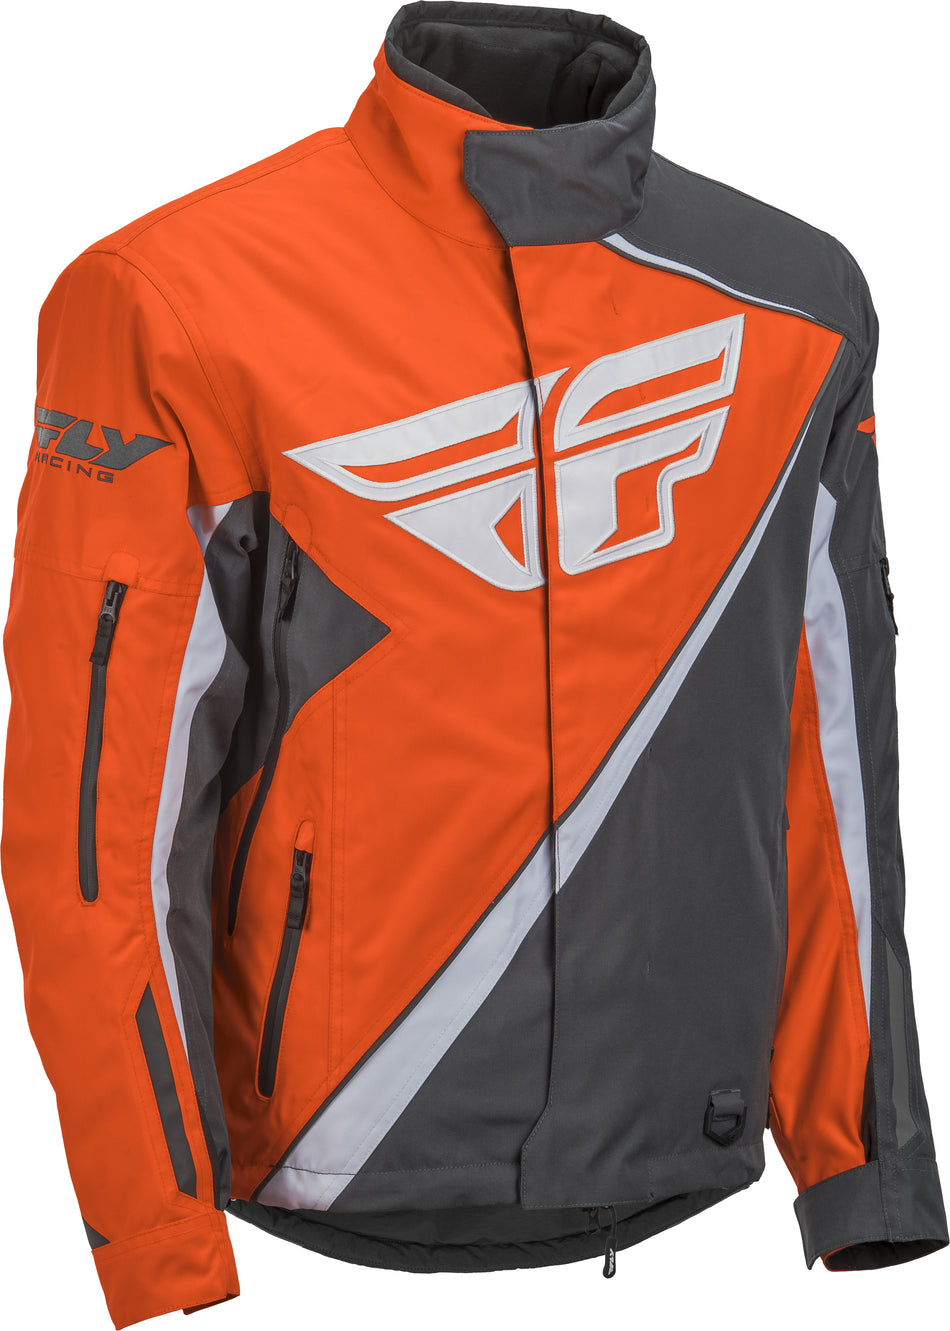 FLY RACING Snx Pro Jacket Orange/Grey Sm 470-4088S